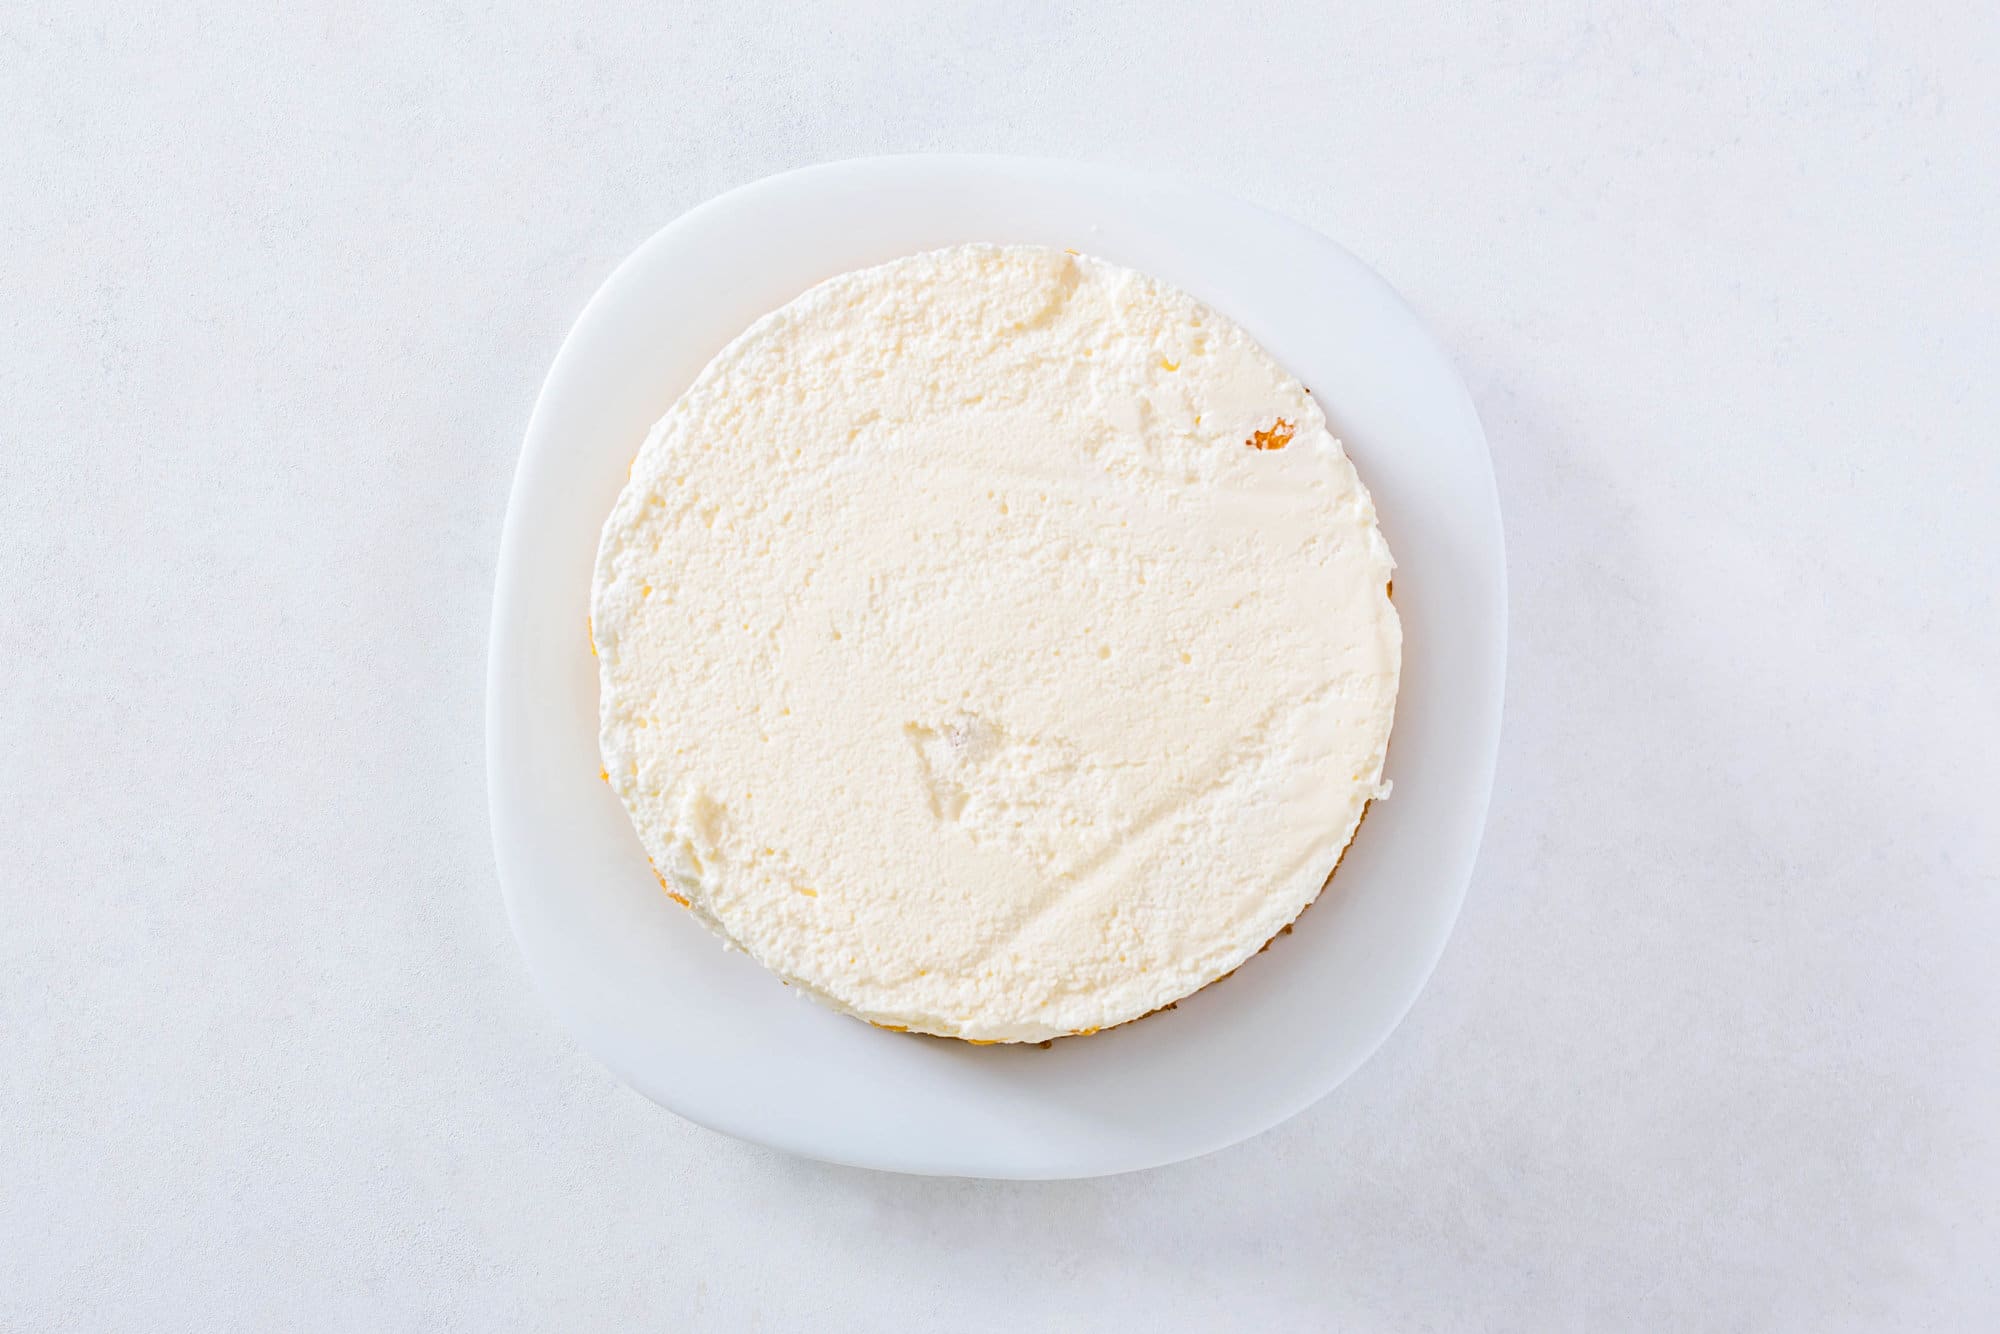 mandarin-orange-mousse-cake-layers-cream-on-a-white-plate